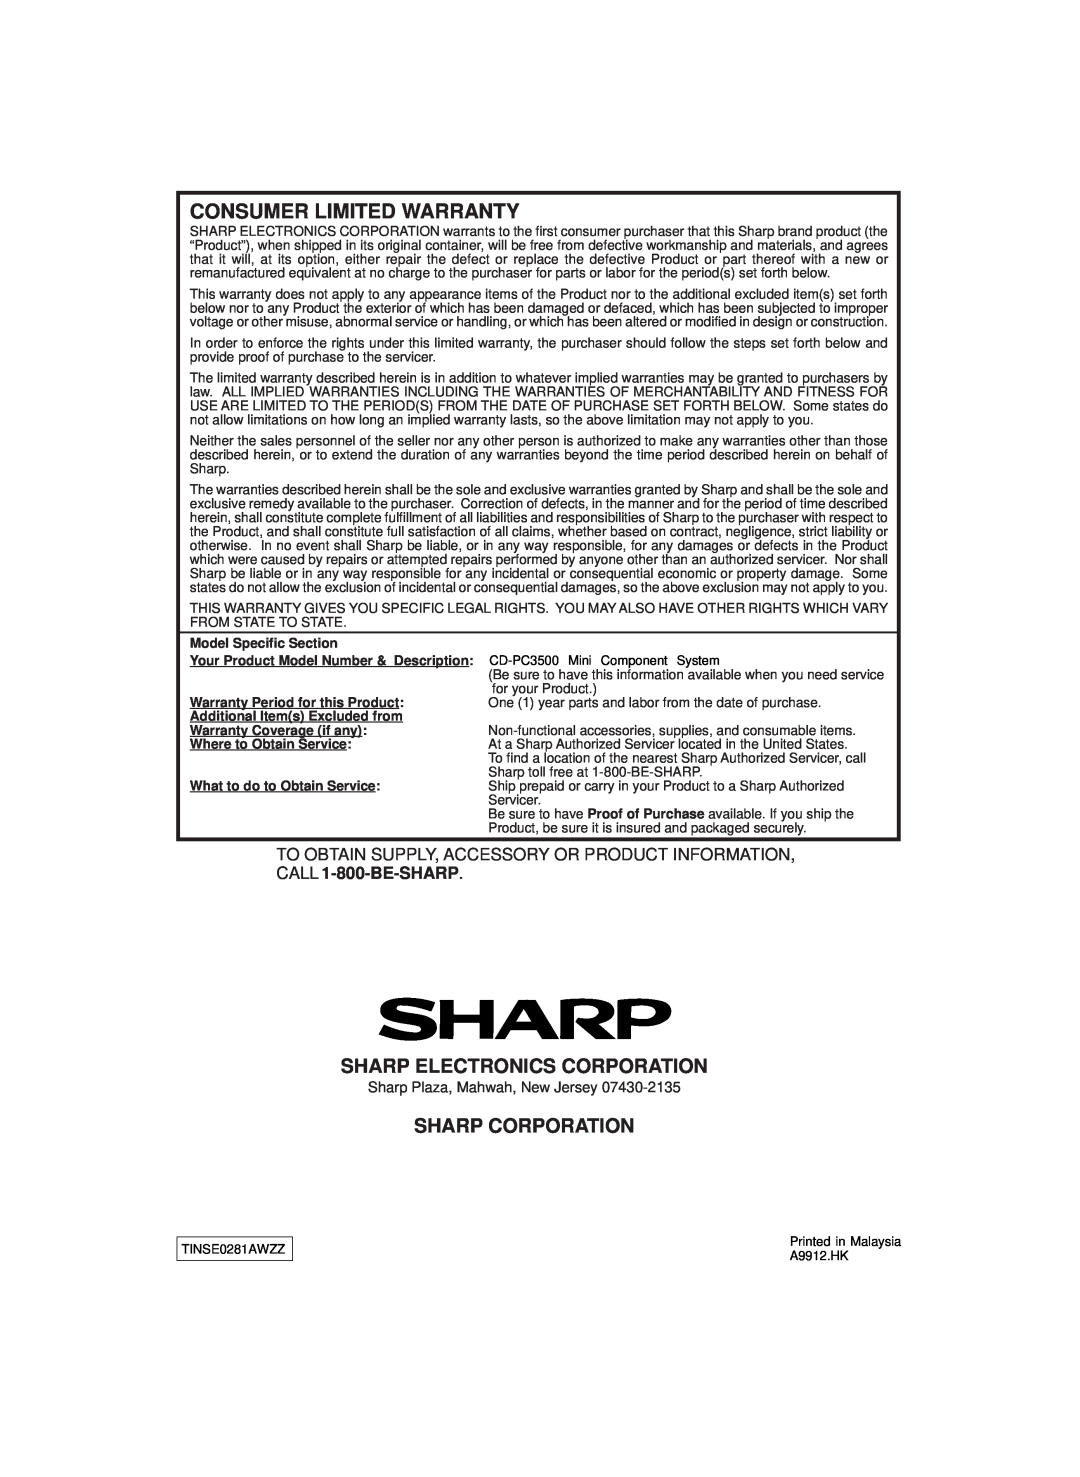 Sharp CDPC3500 operation manual Consumer Limited Warranty, Sharp Electronics Corporation, Sharp Corporation 